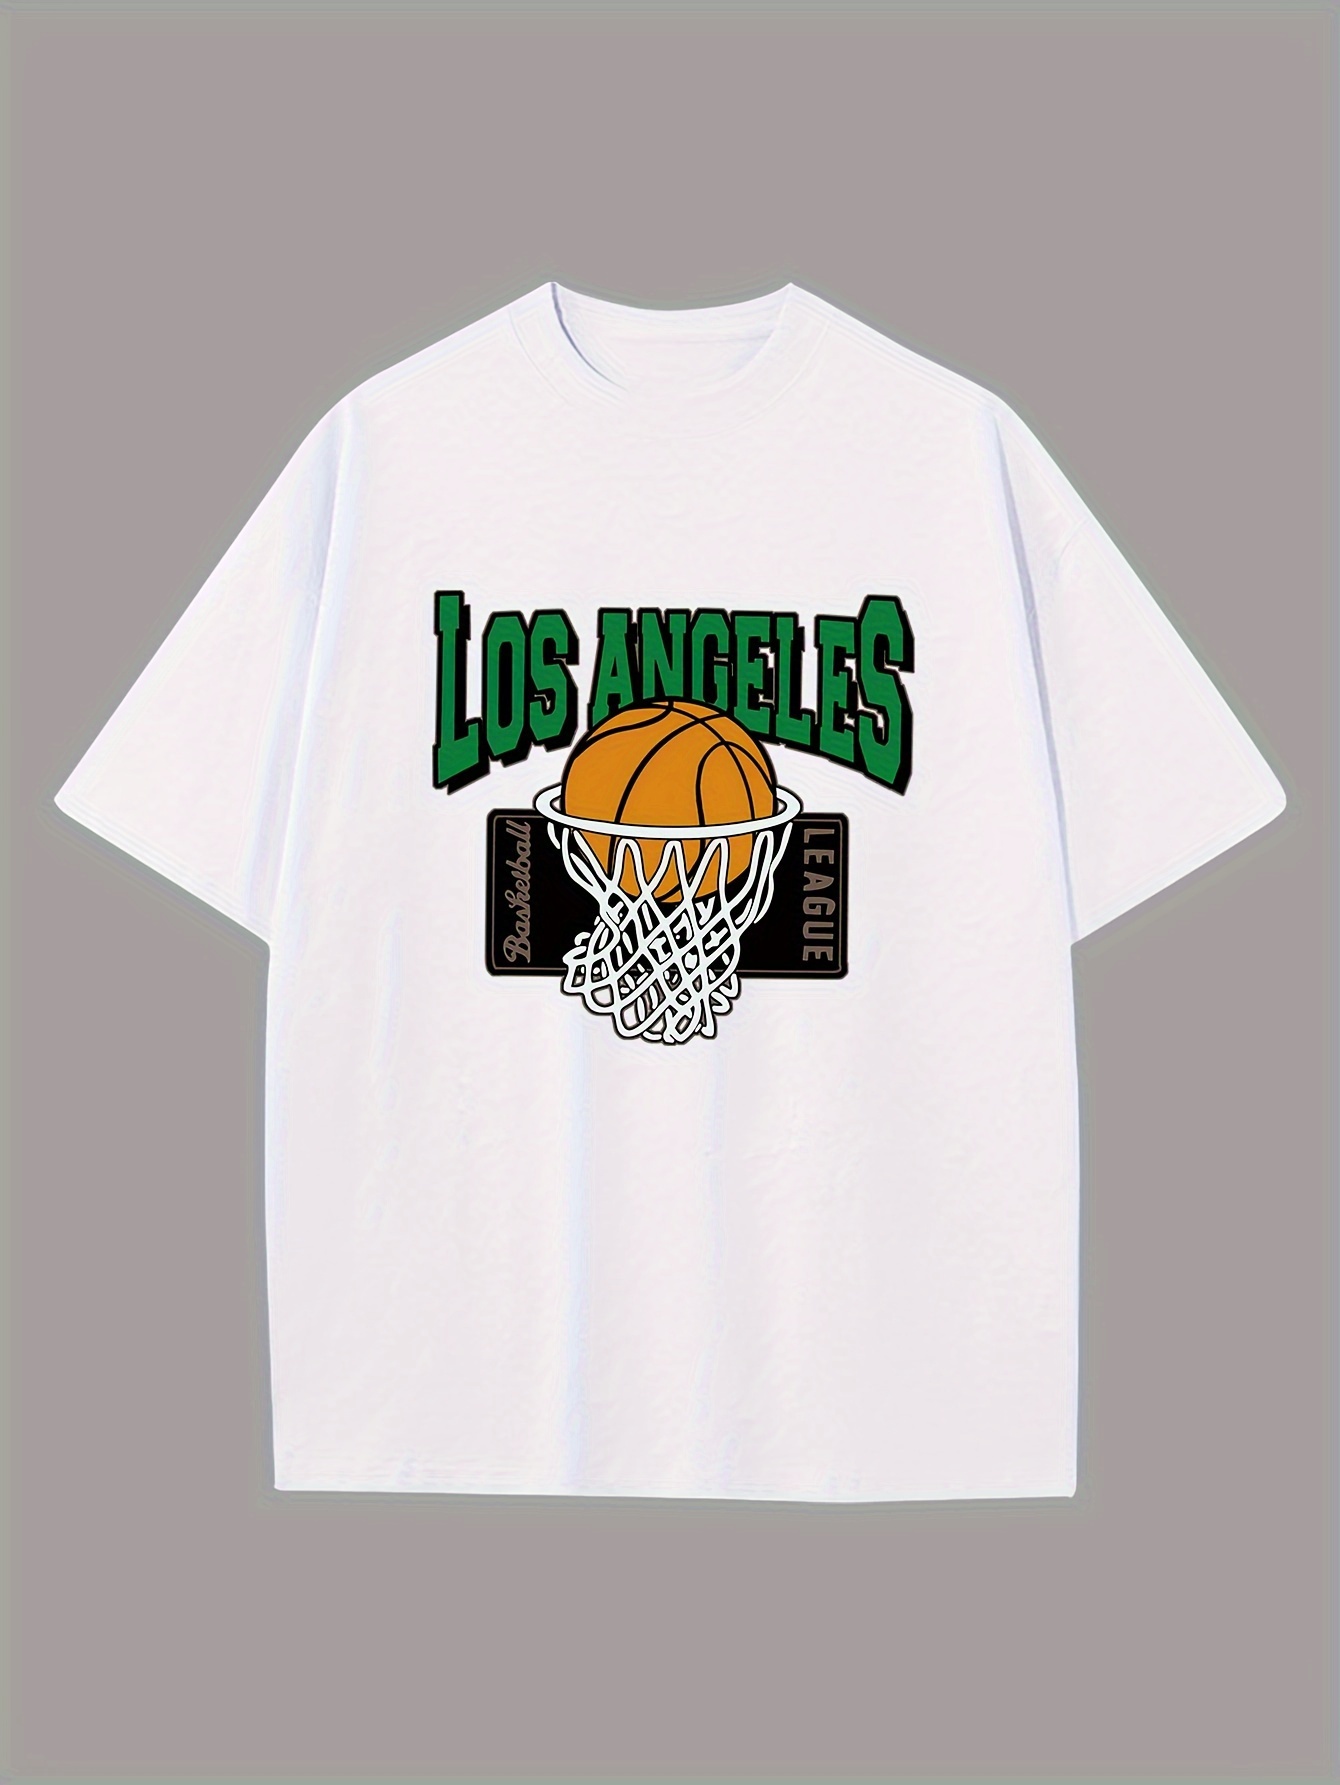 Men's Los Angeles Basketball Graphic T-shirt